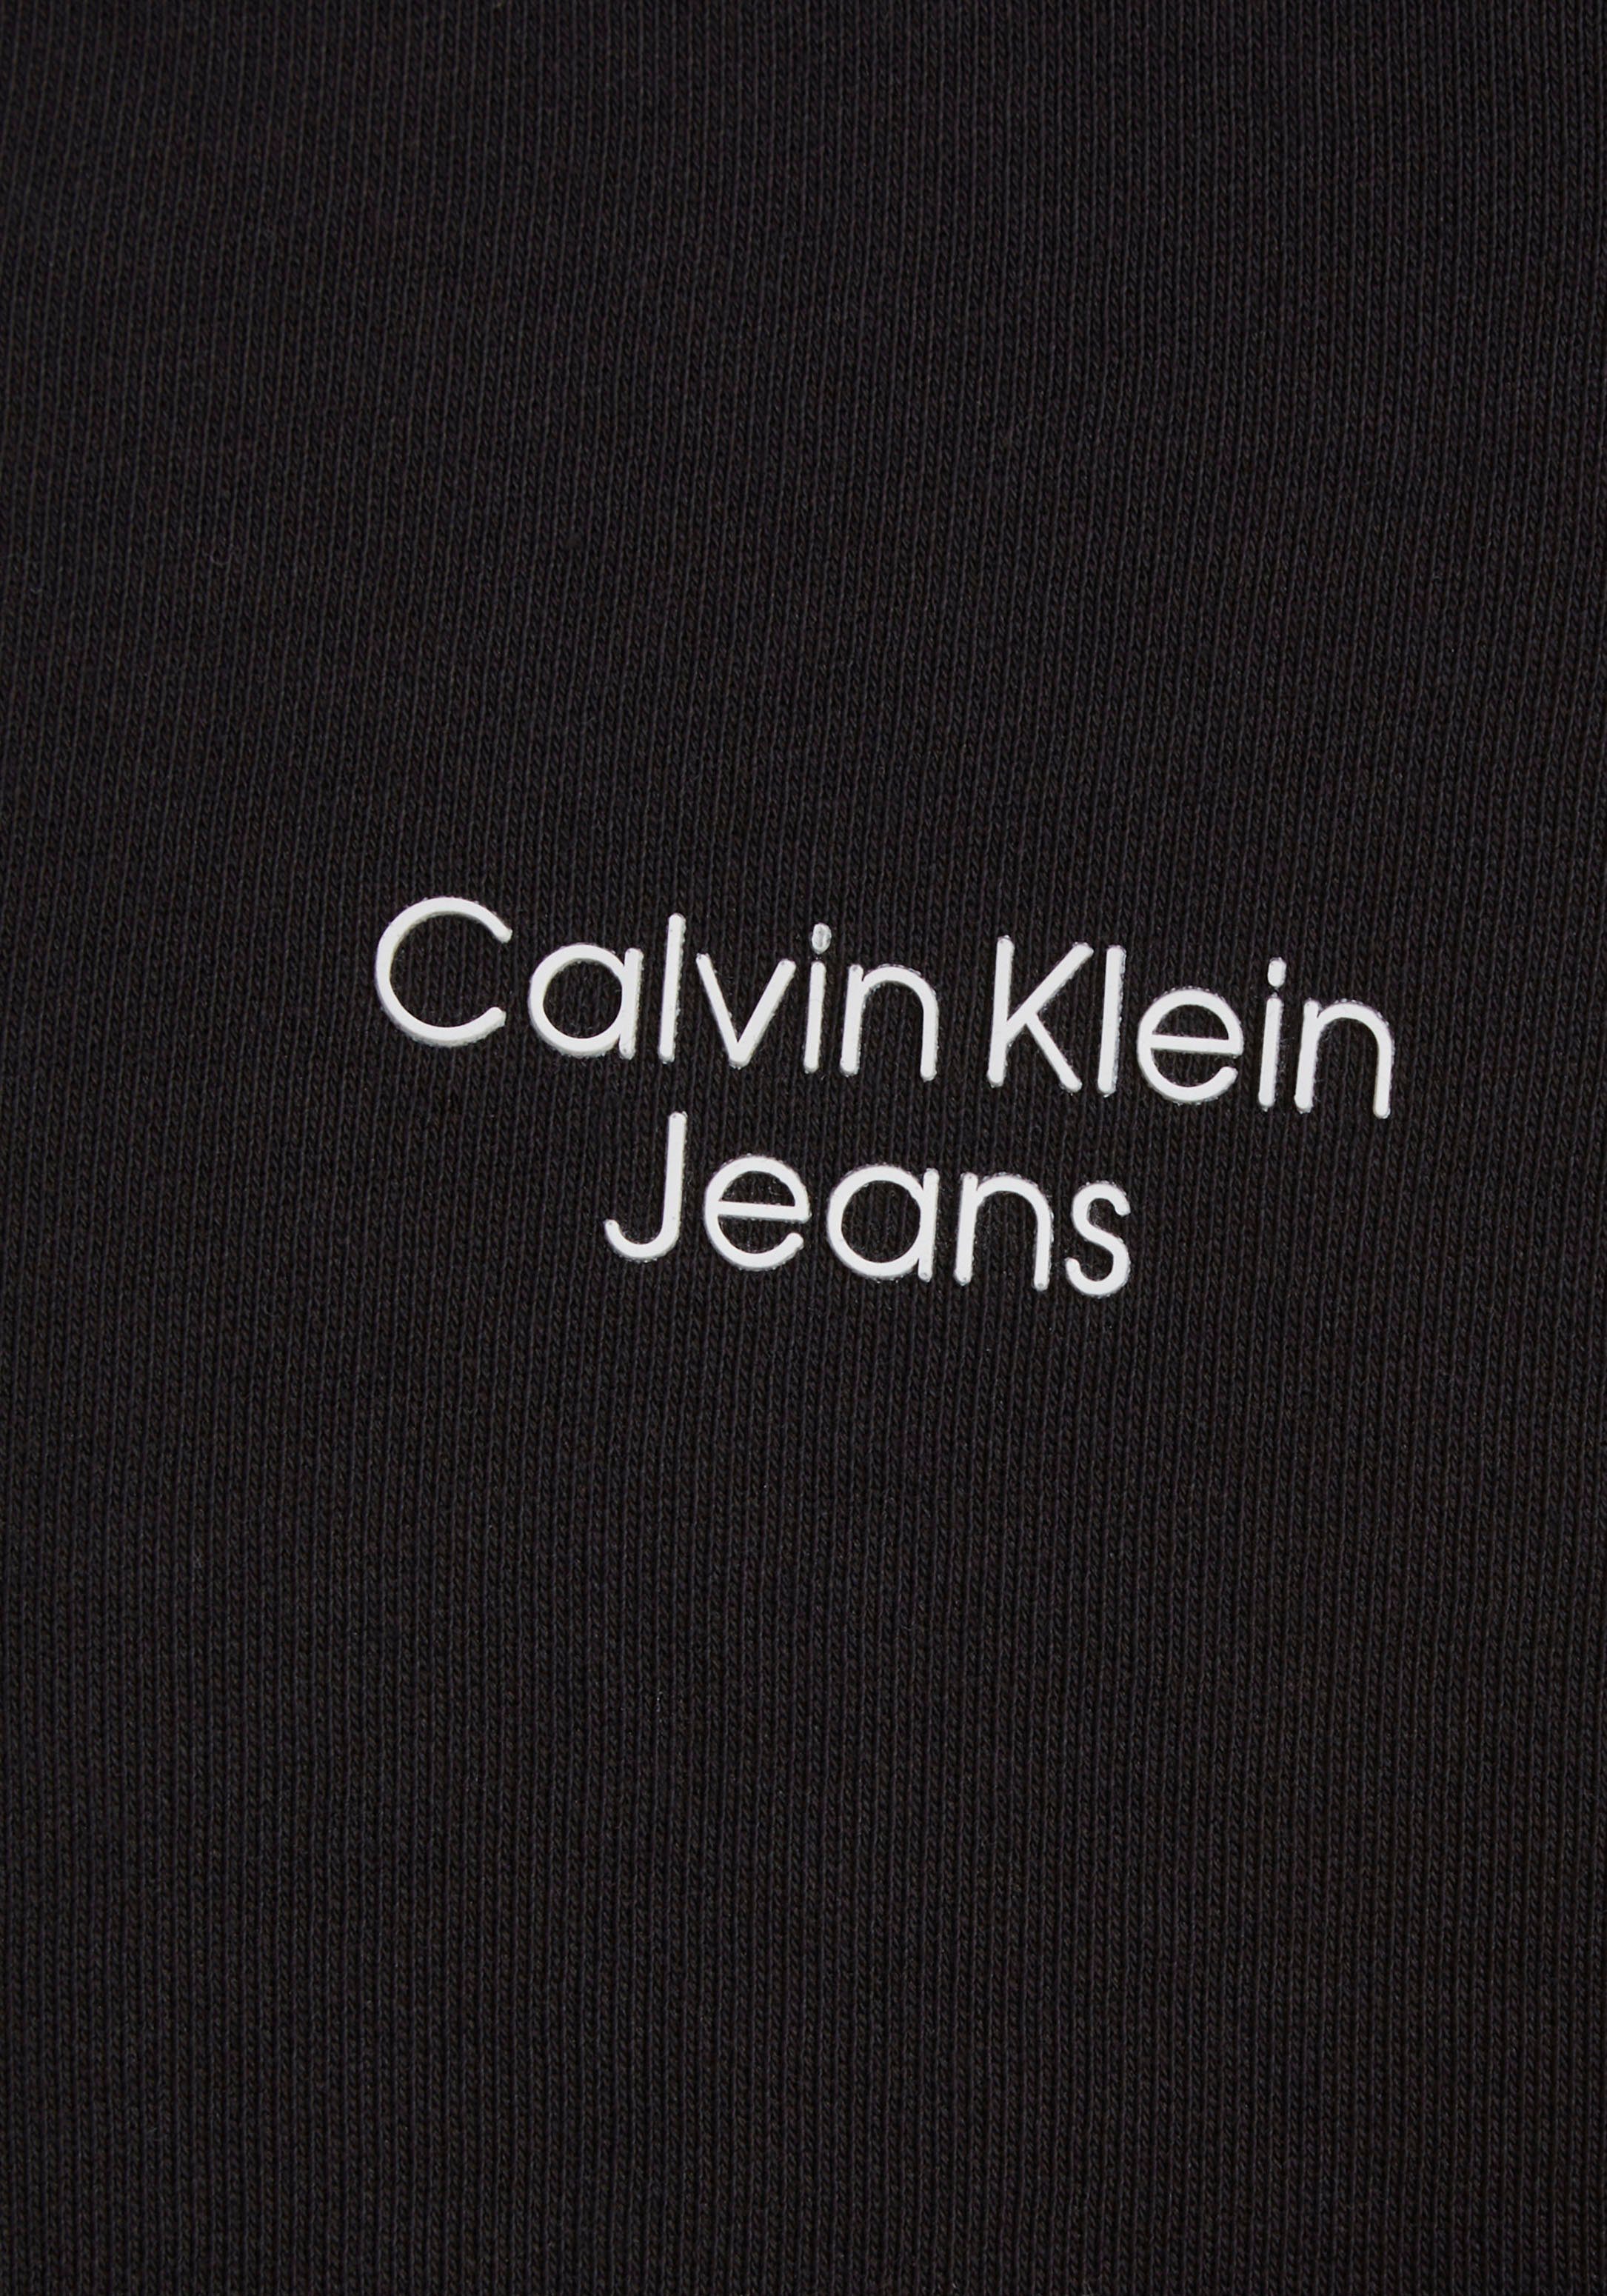 Calvin Klein STACK SWEATSHIRT Jeans LOGO CKJ Sweatshirt